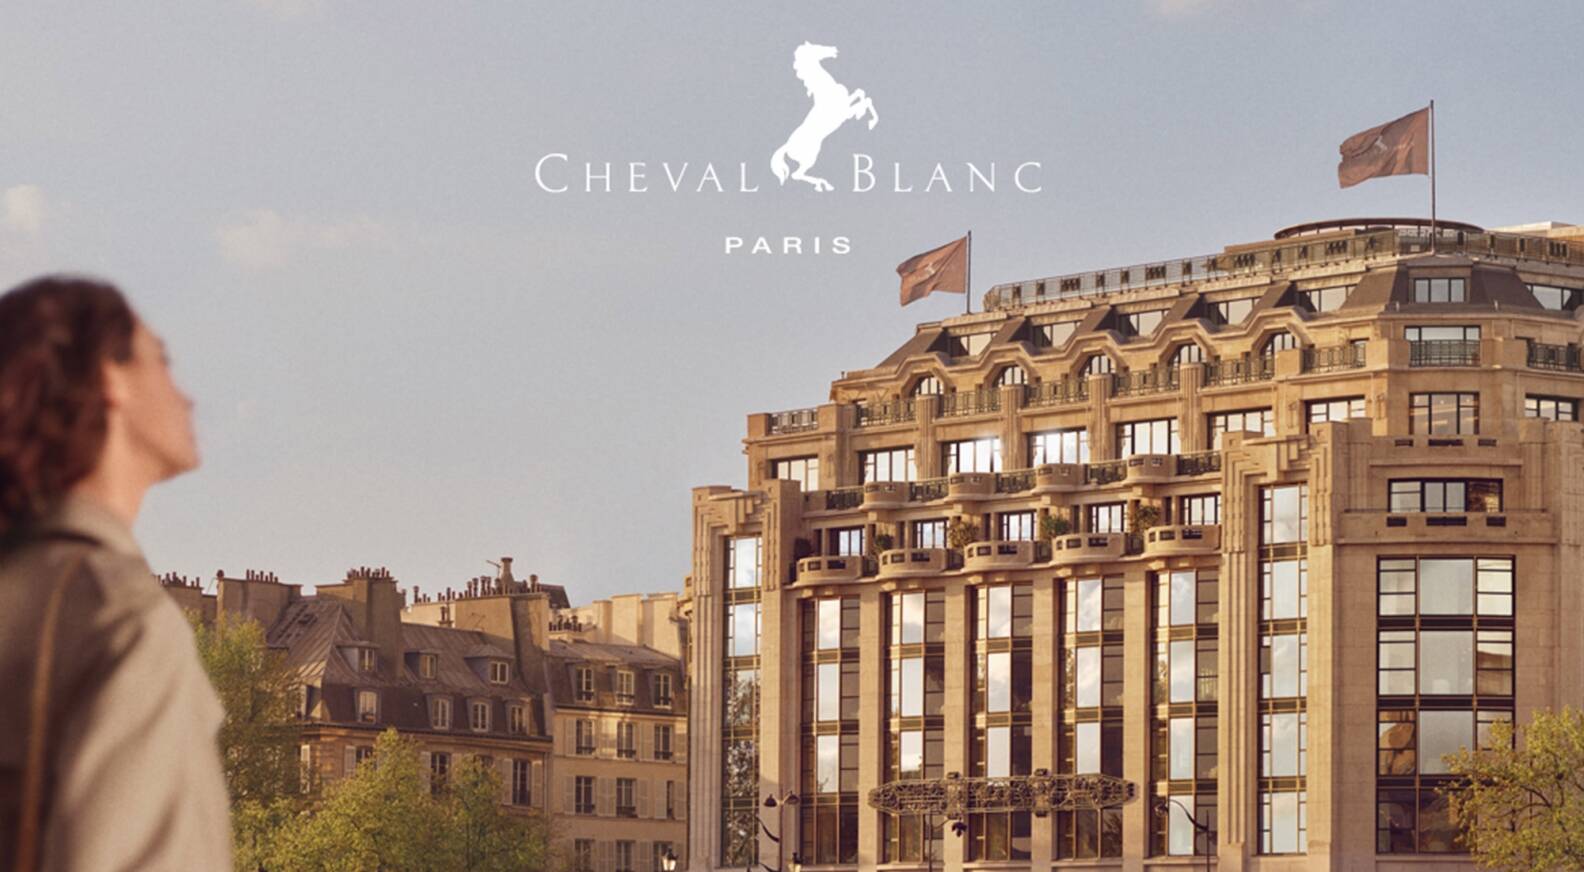 Cheval Blanc Paris svela una nuova moderna sede nella capitale francese -  LVMH